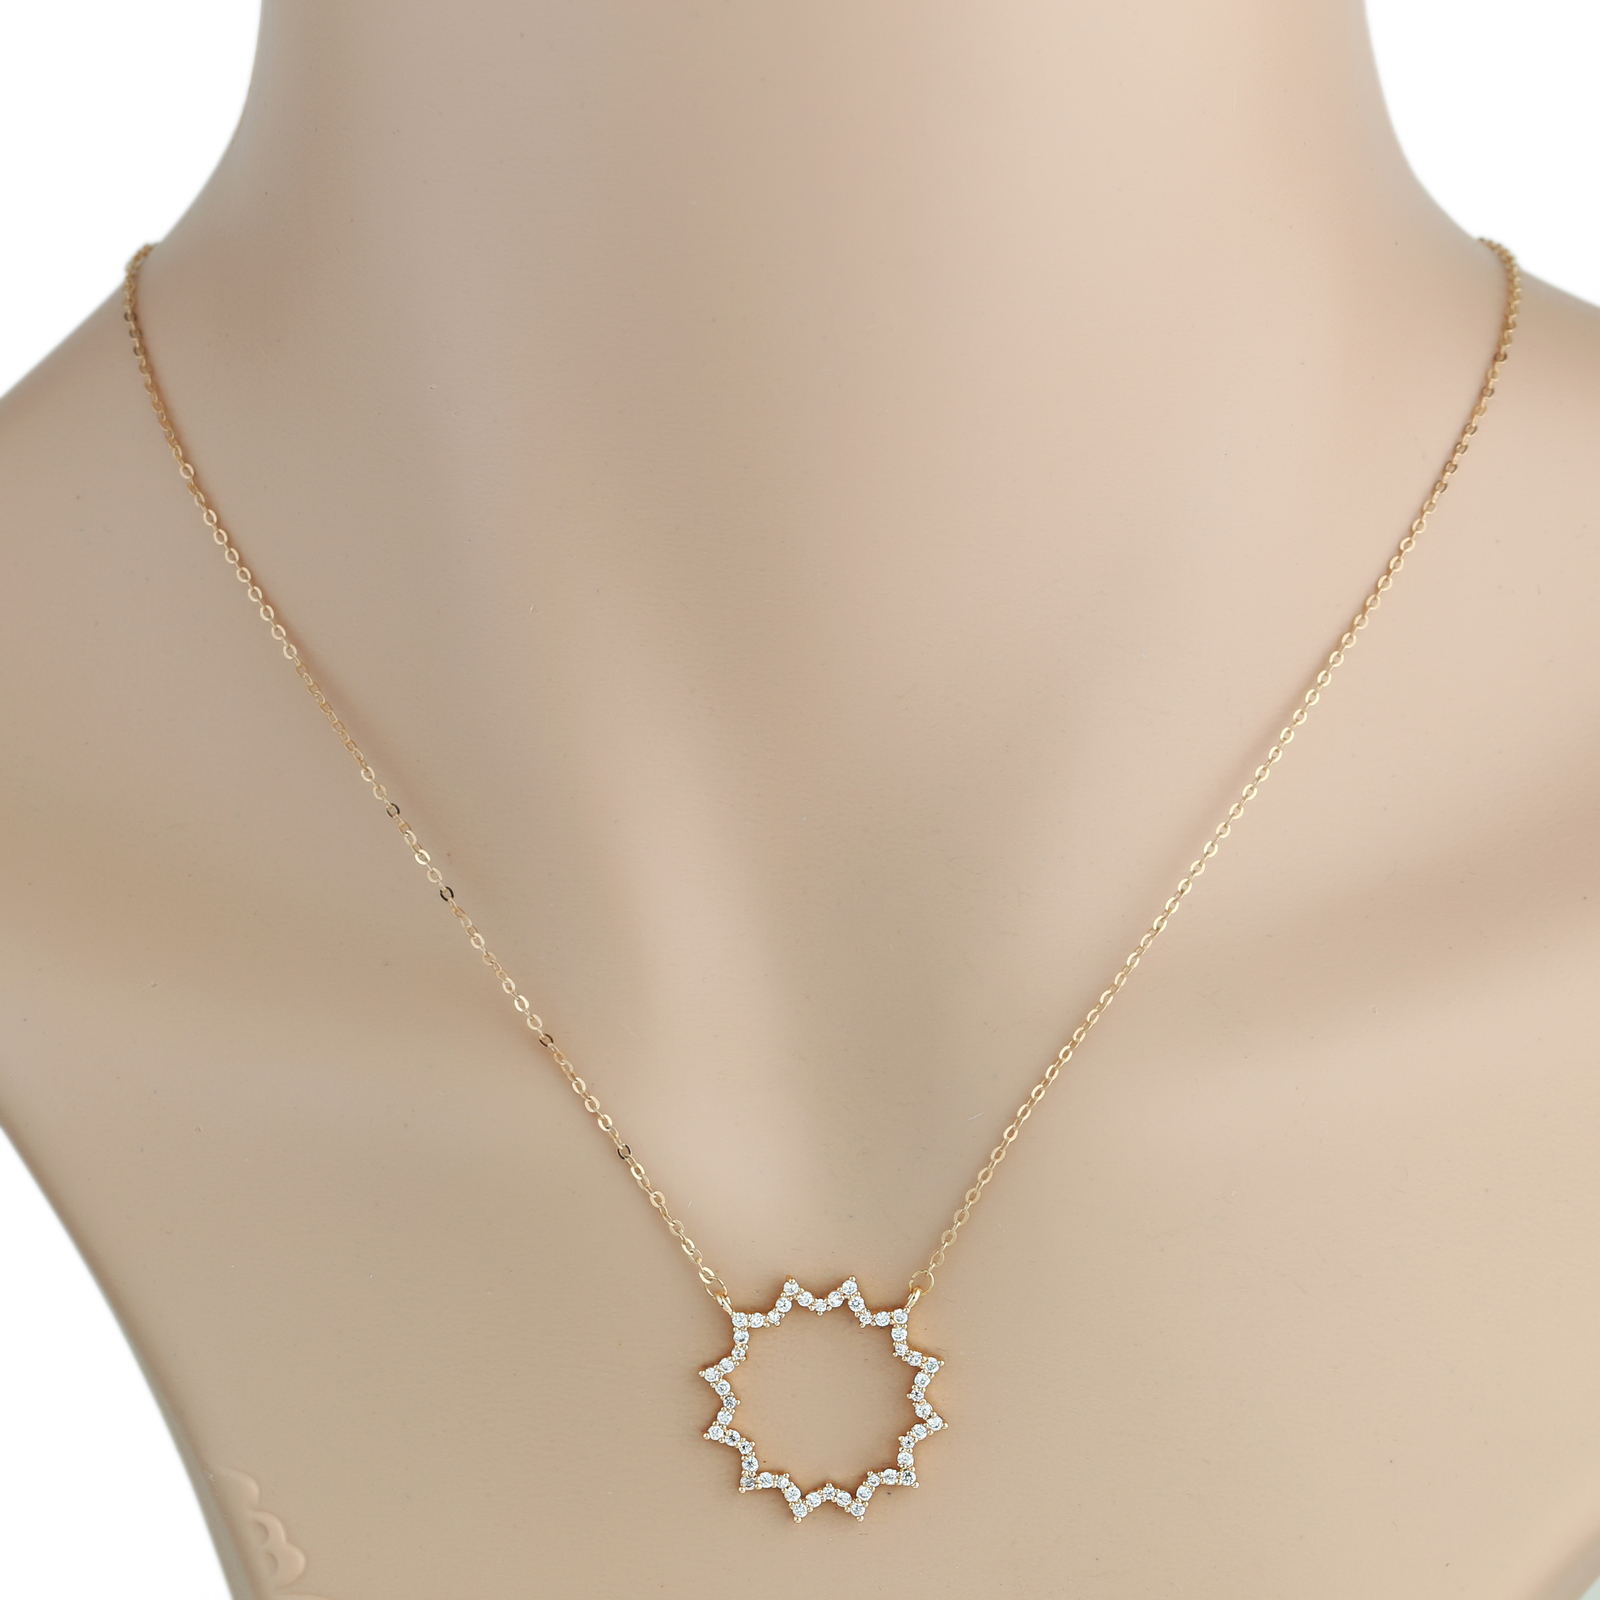 rose gold tone sun burst pendant necklace with swarovski style crystals